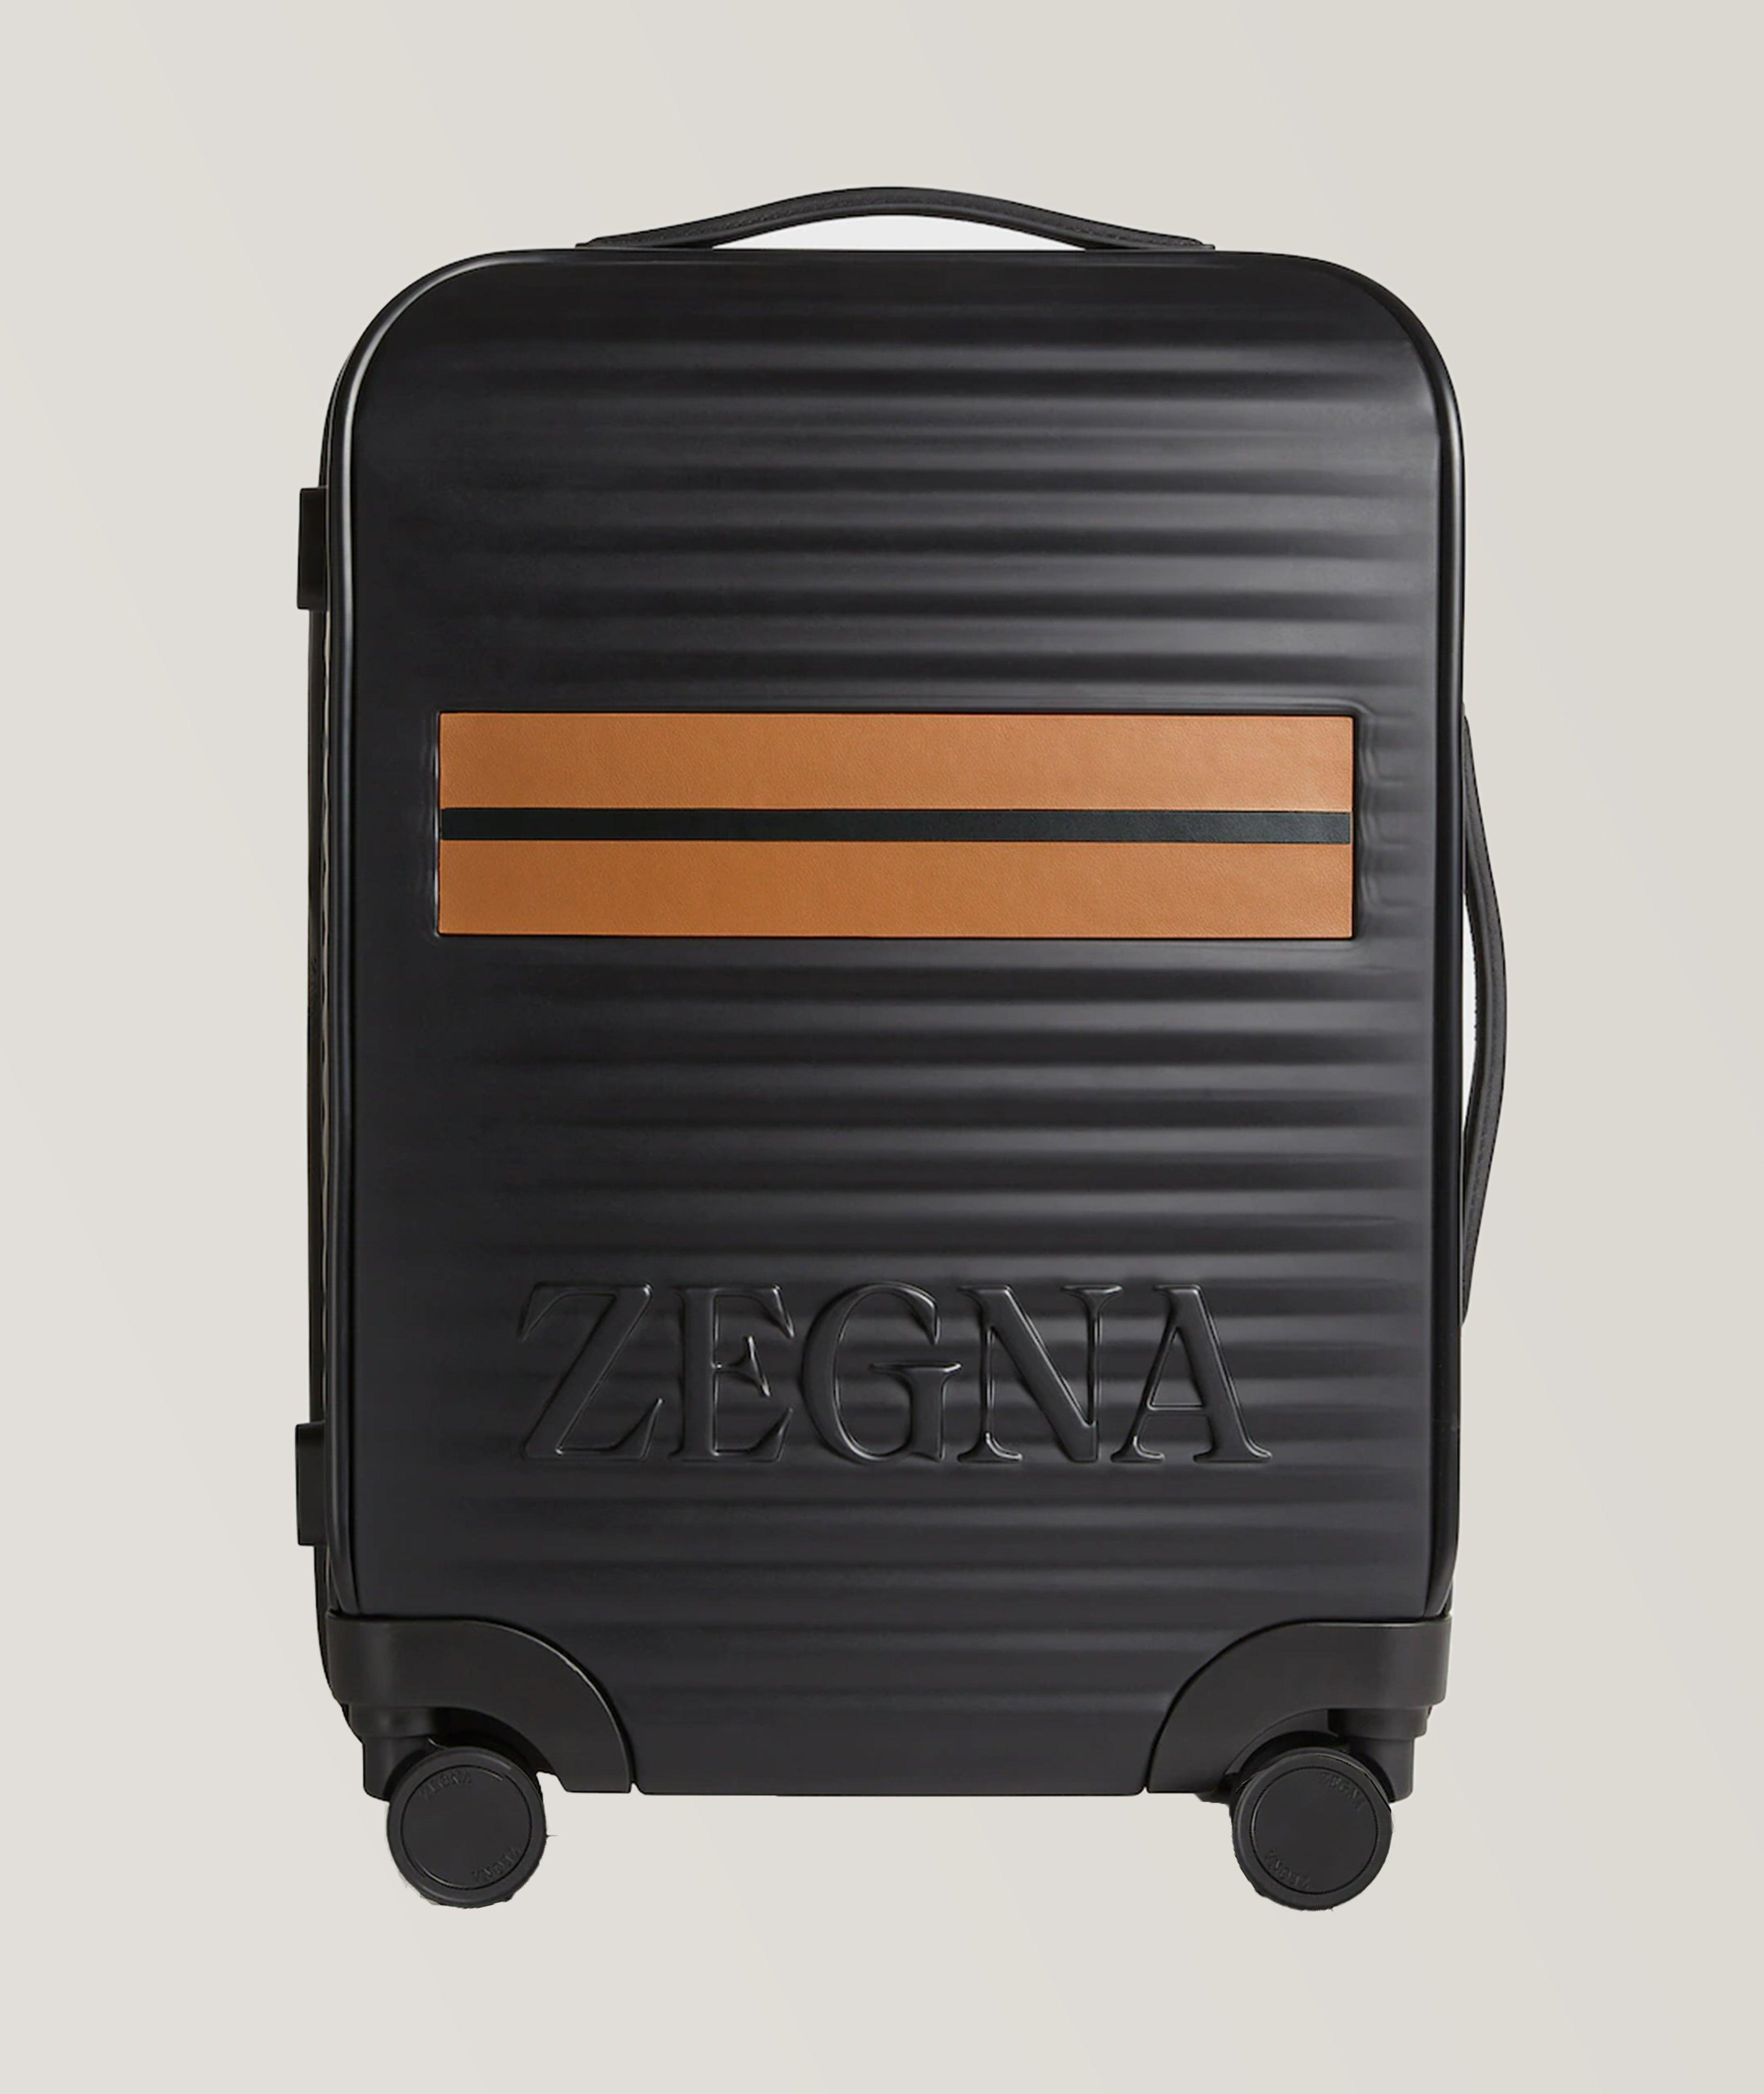 Technical Leggerissimo Trolley Suitcase image 0